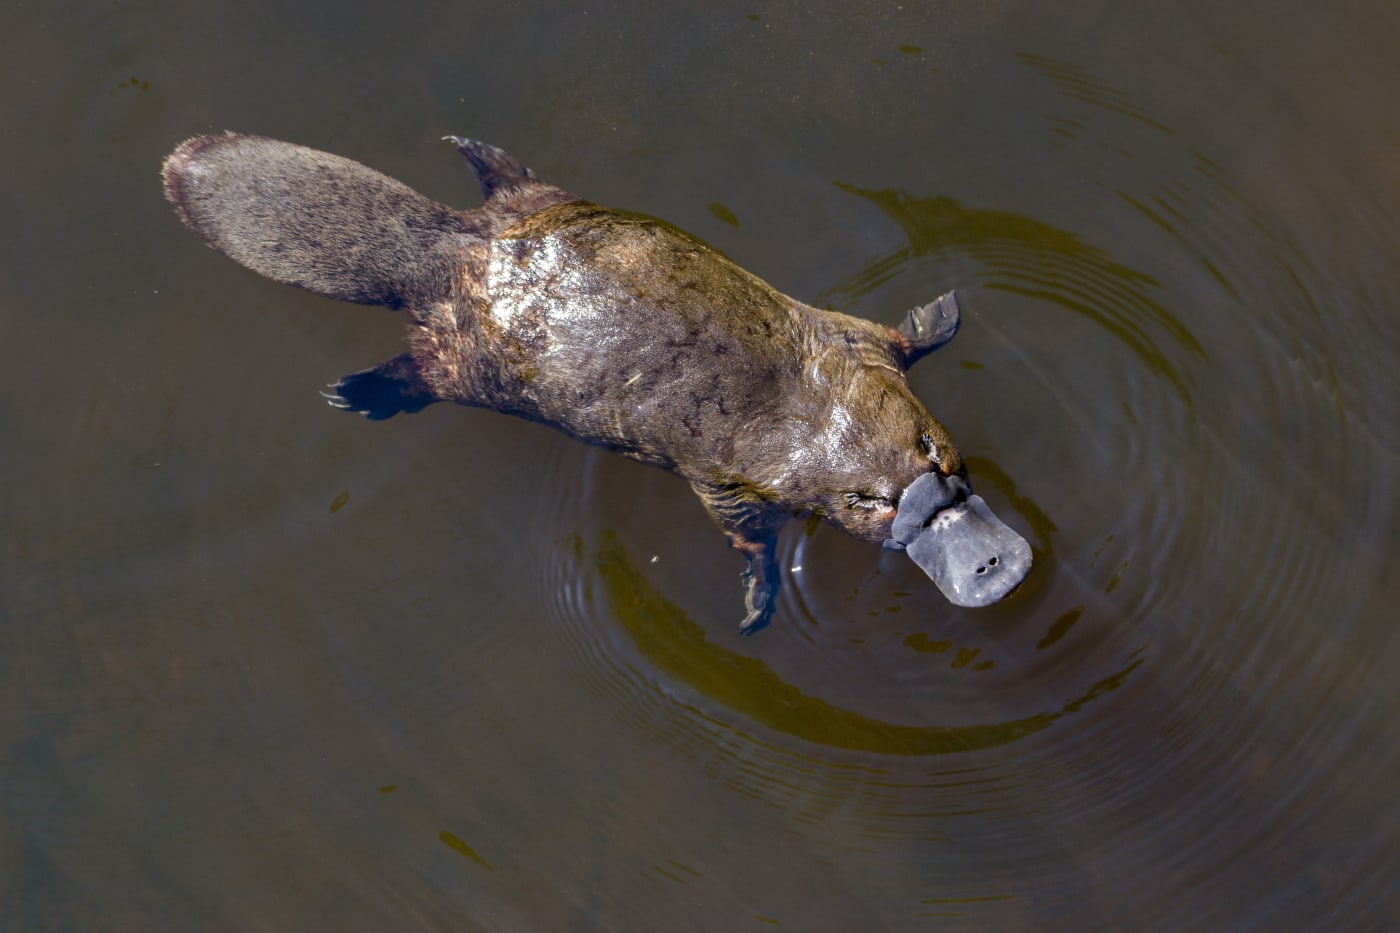 Burnie, Tasmania, Australia: March 2019: Platypus swimming in the river